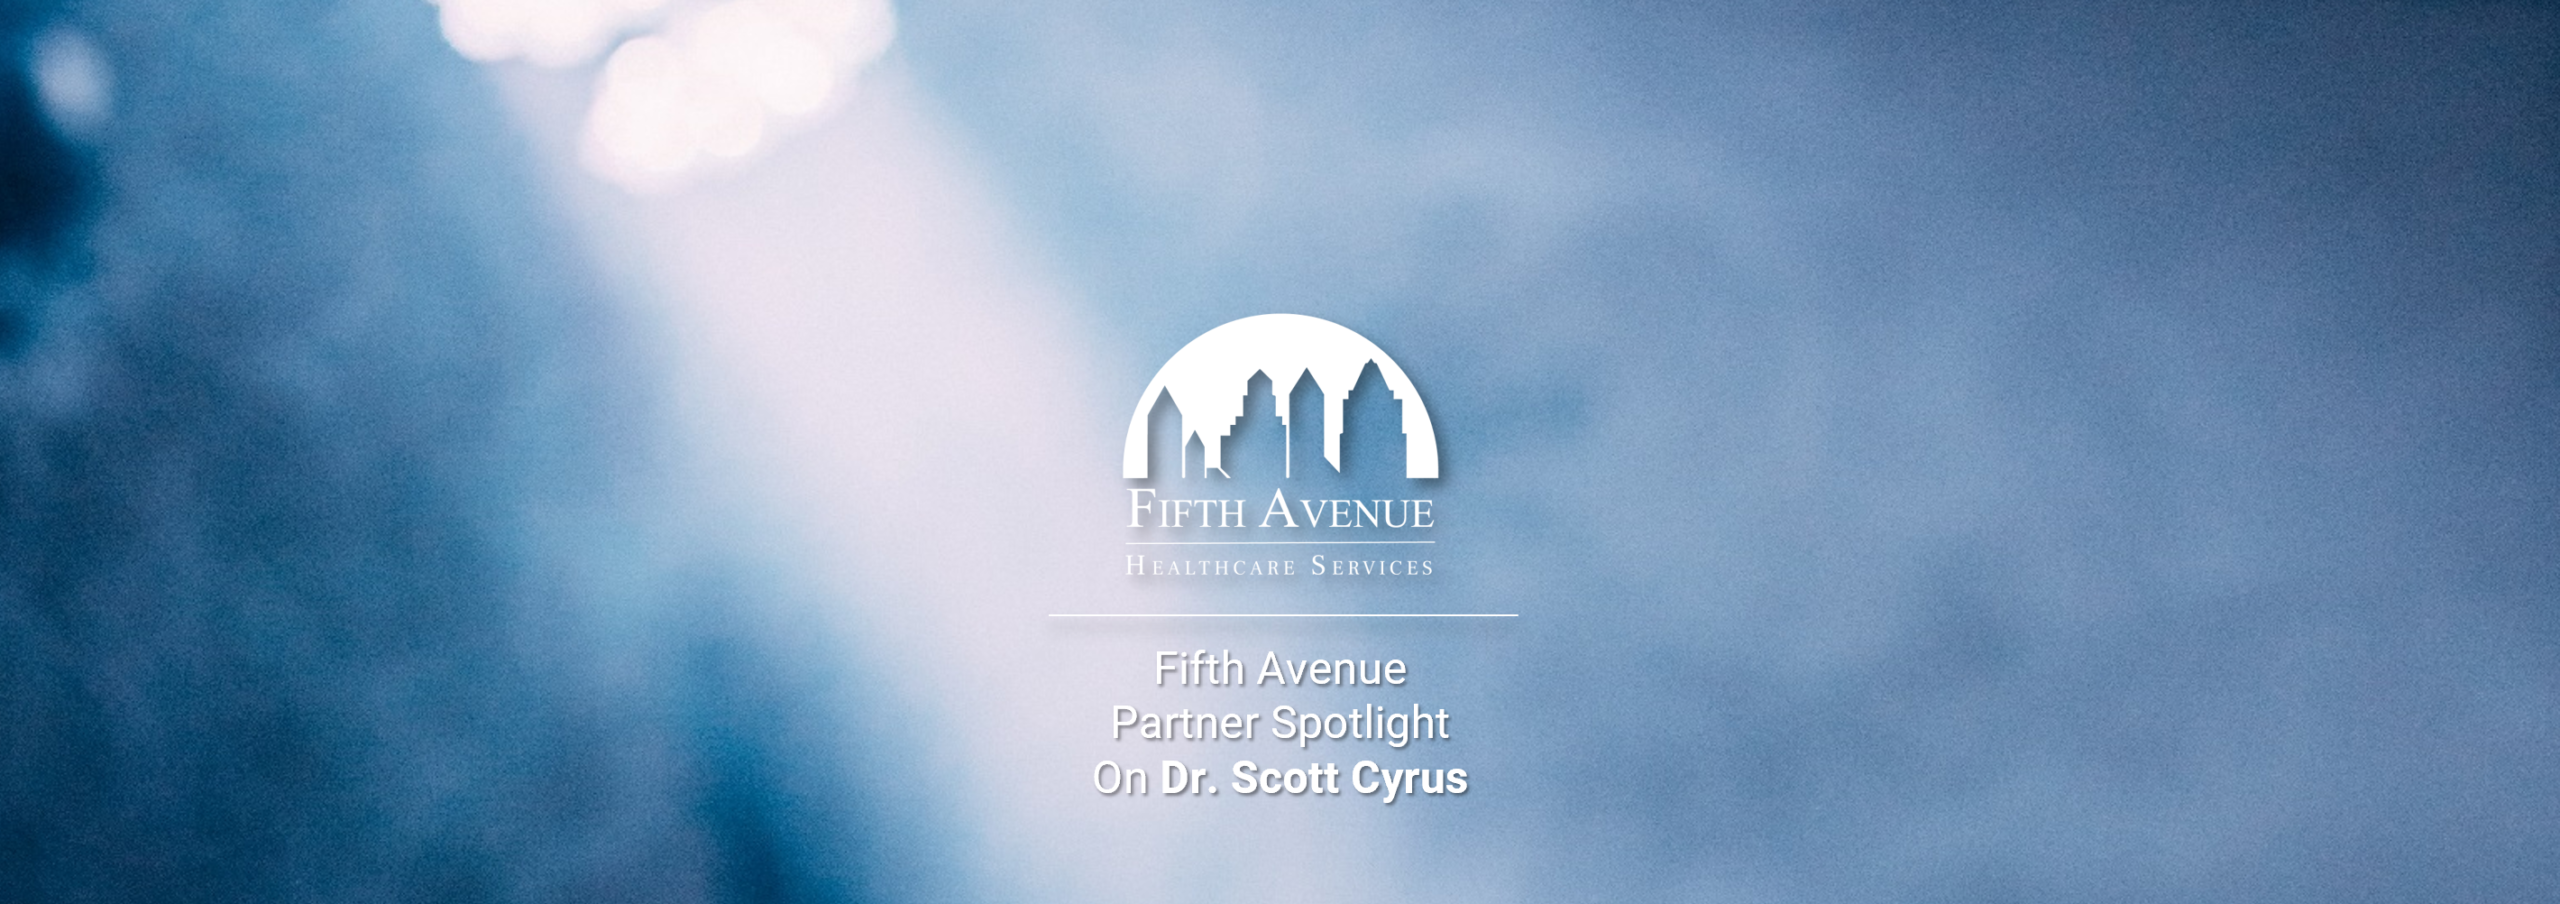 Fifth Avenue Partnership Spotlight Dr. Scott Cyrus